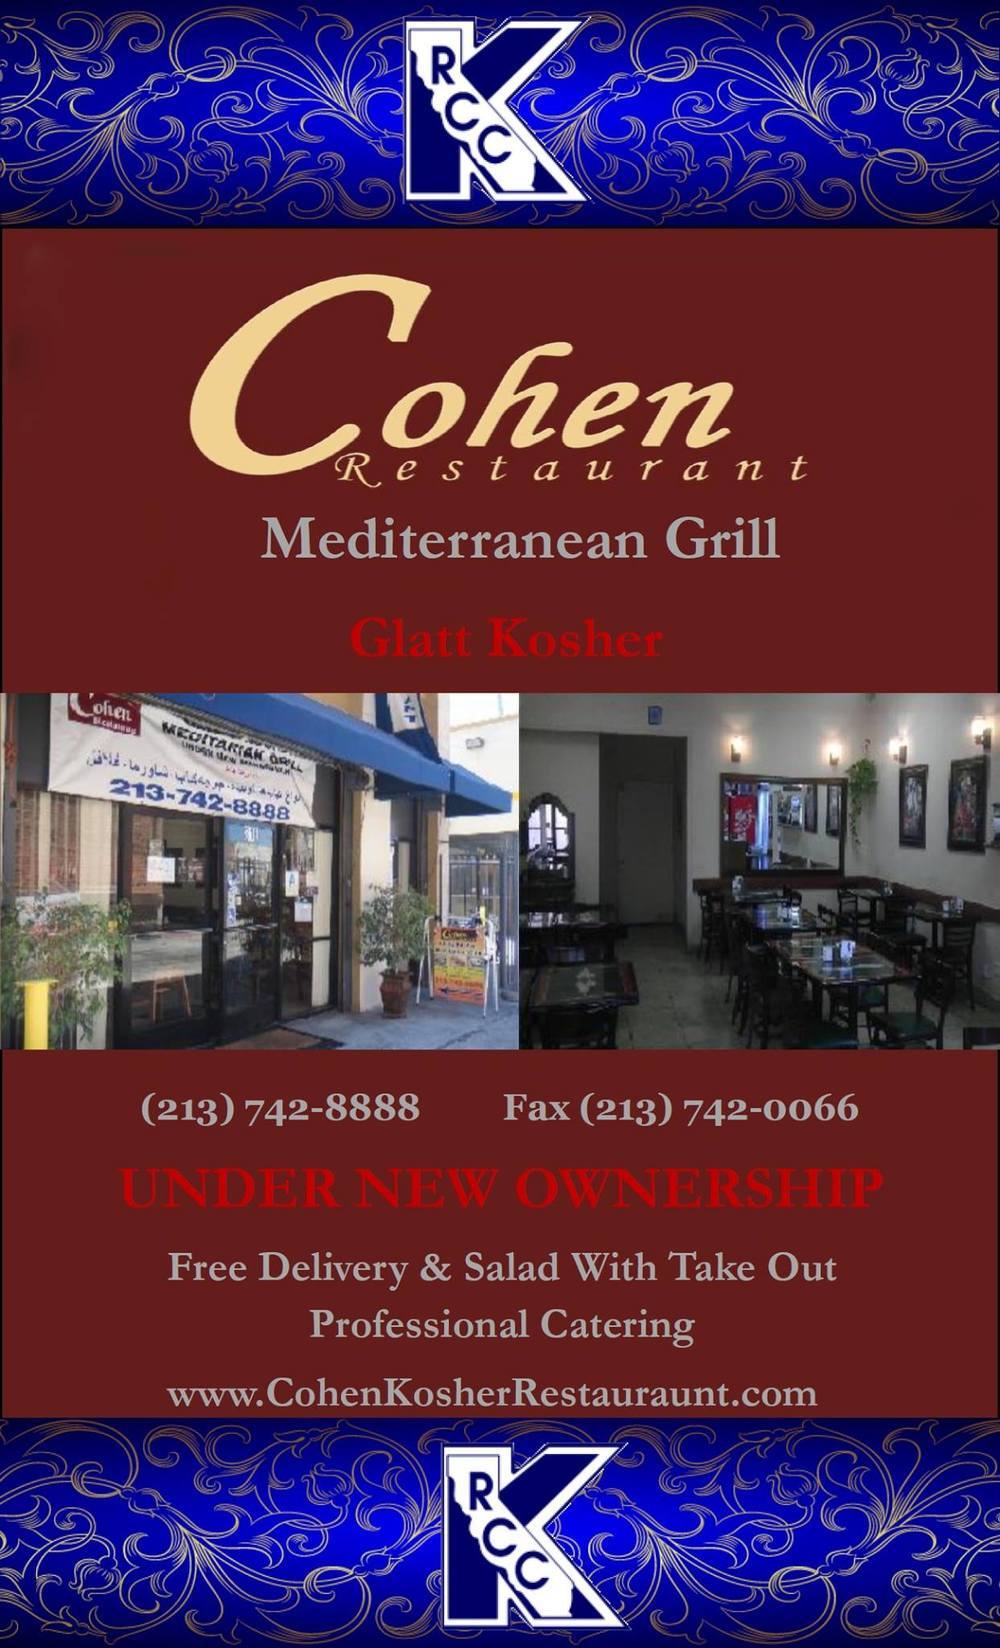 Cohen Restaurant